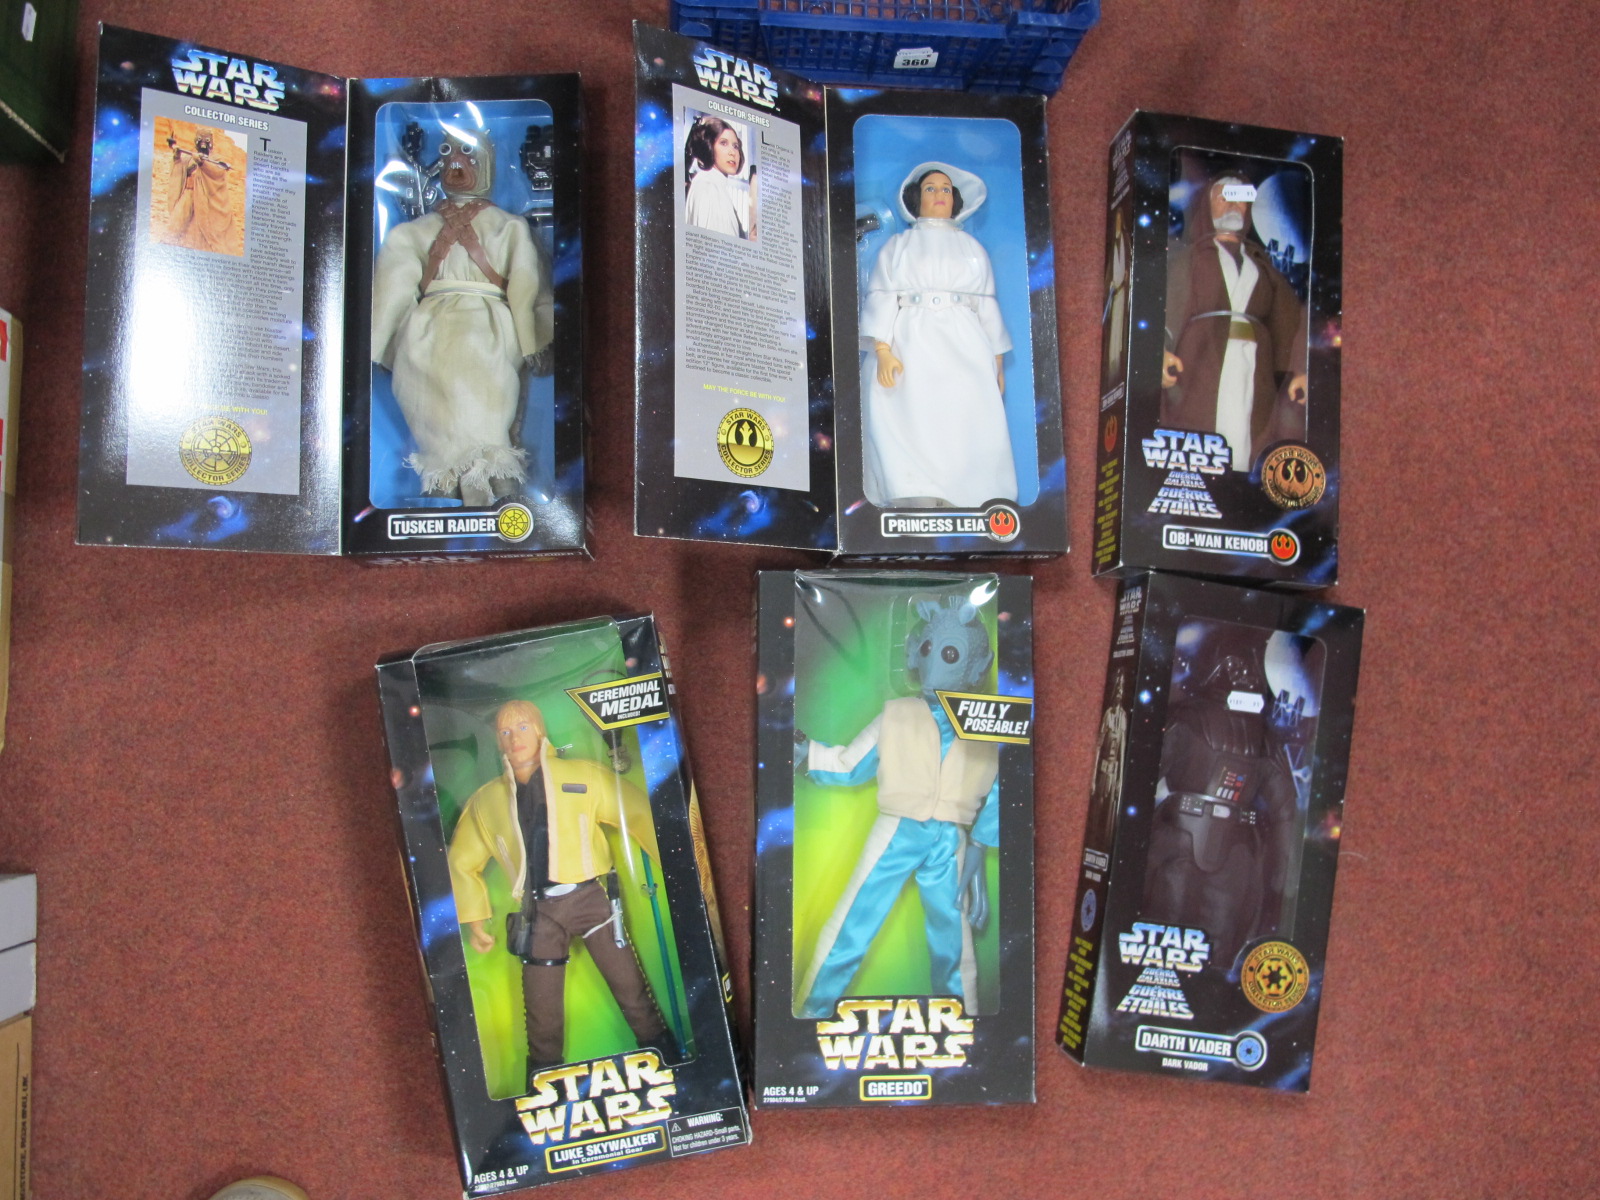 Star Wars:- Collectors Series, Obi-Wan Kenobi, Princes Leia, Tusken Raider, Darth Vader. Plus two